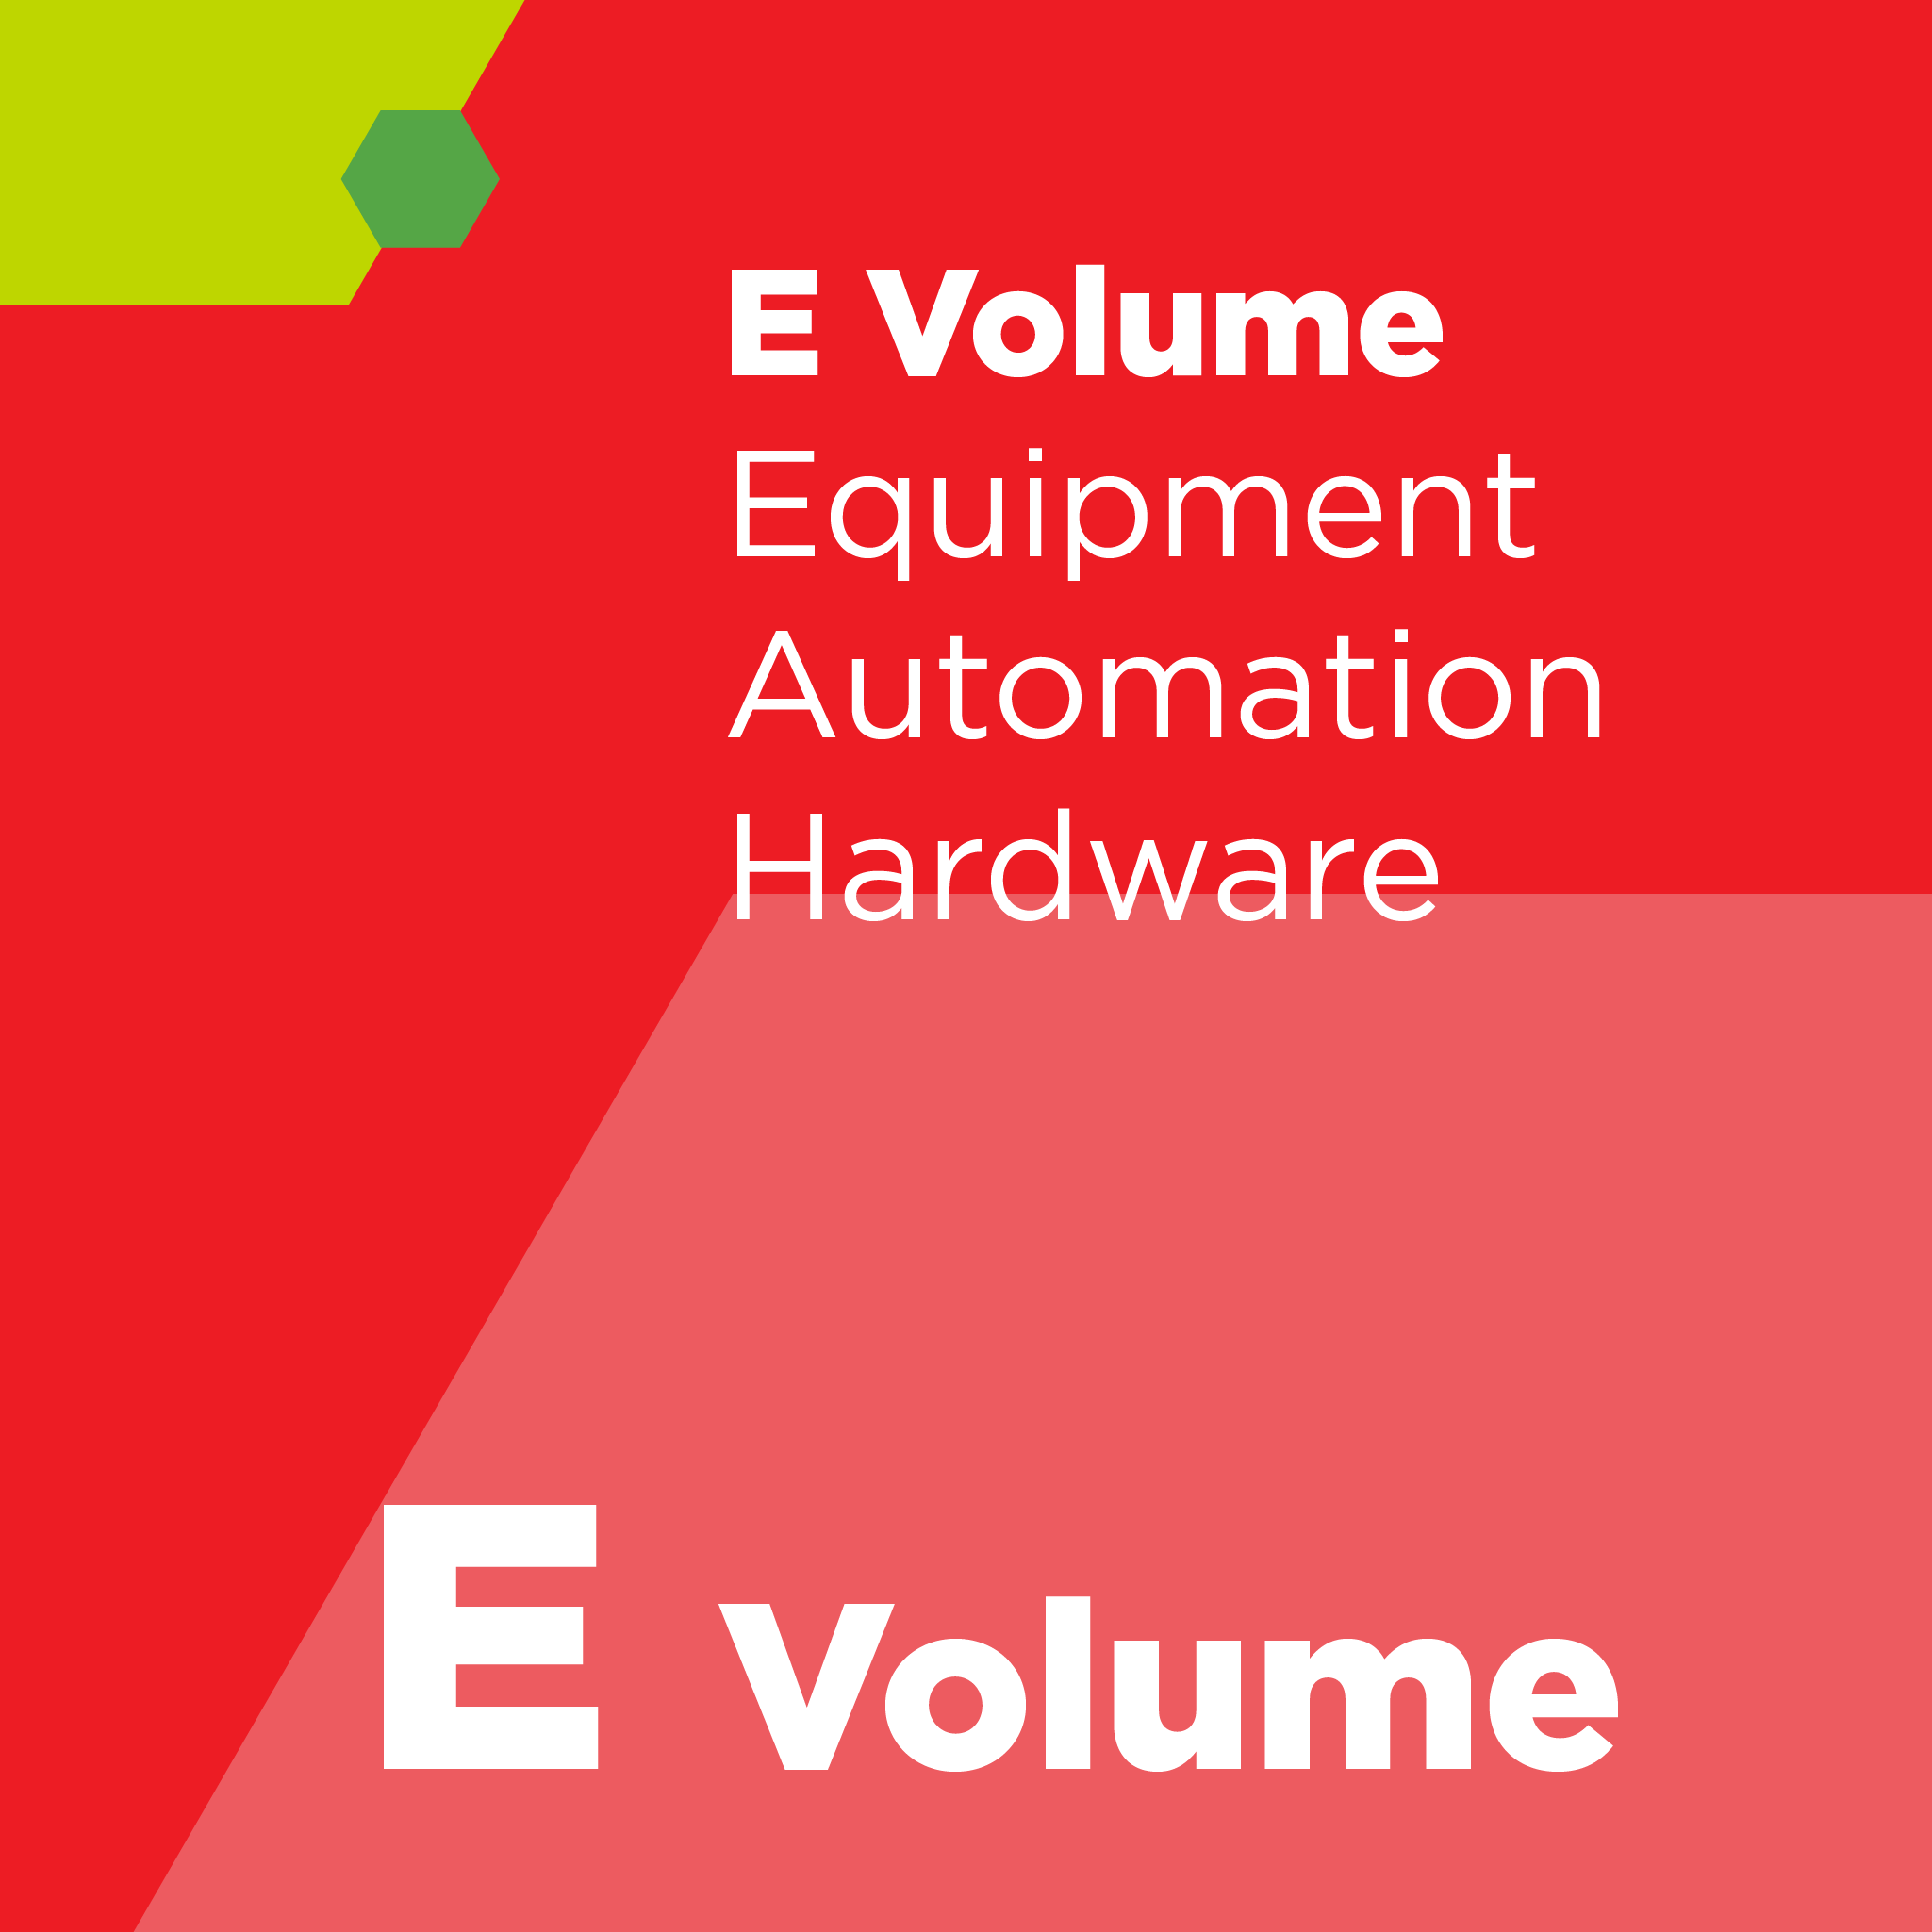 E06400 - SEMI E64 - Specification for 300 mm Cart to SEMI E15.1 Docking Interface Port